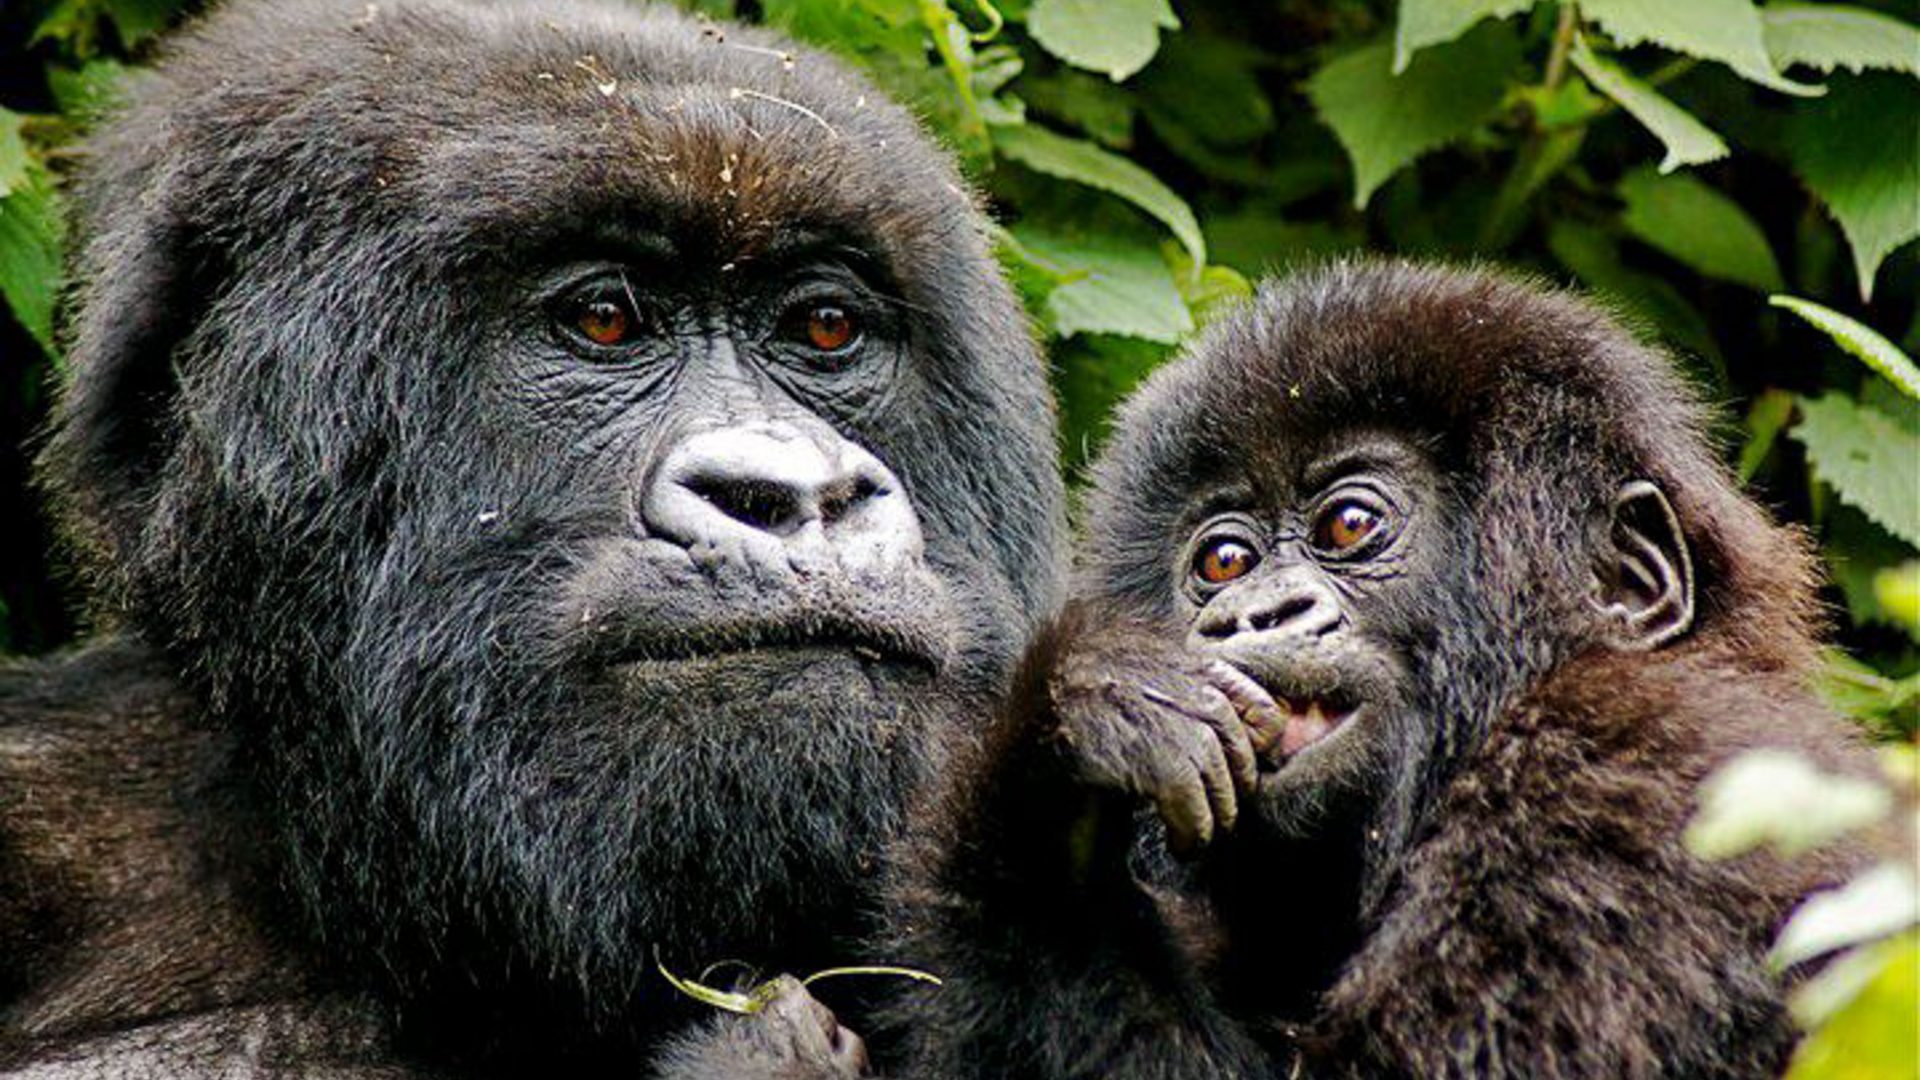 Adventures 2018: Gorillas are the highlight of this tour through Rwanda and Uganda.